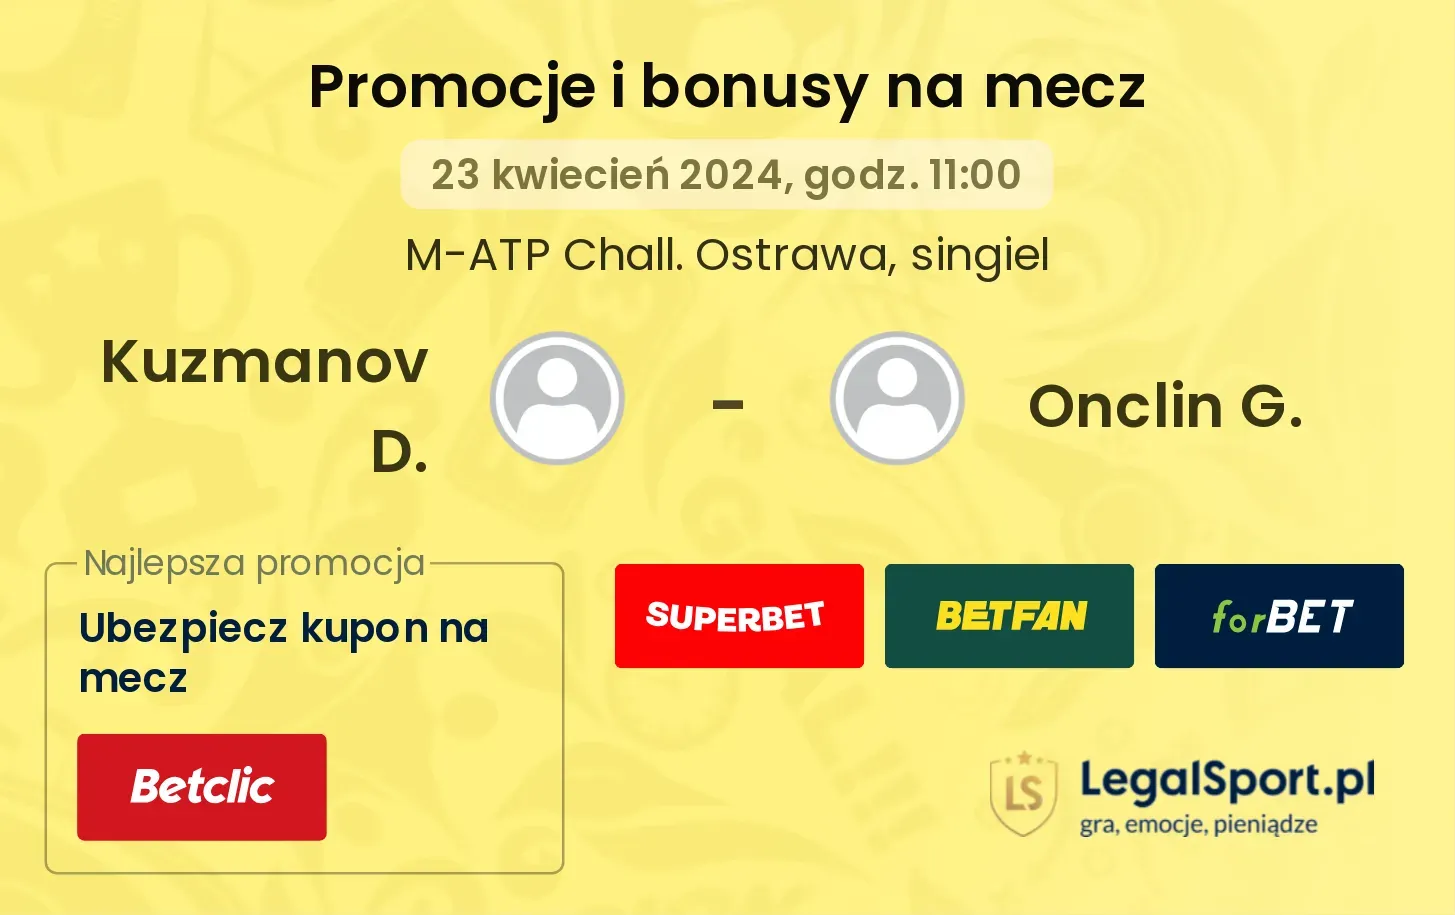 Kuzmanov D. - Onclin G. promocje bonusy na mecz